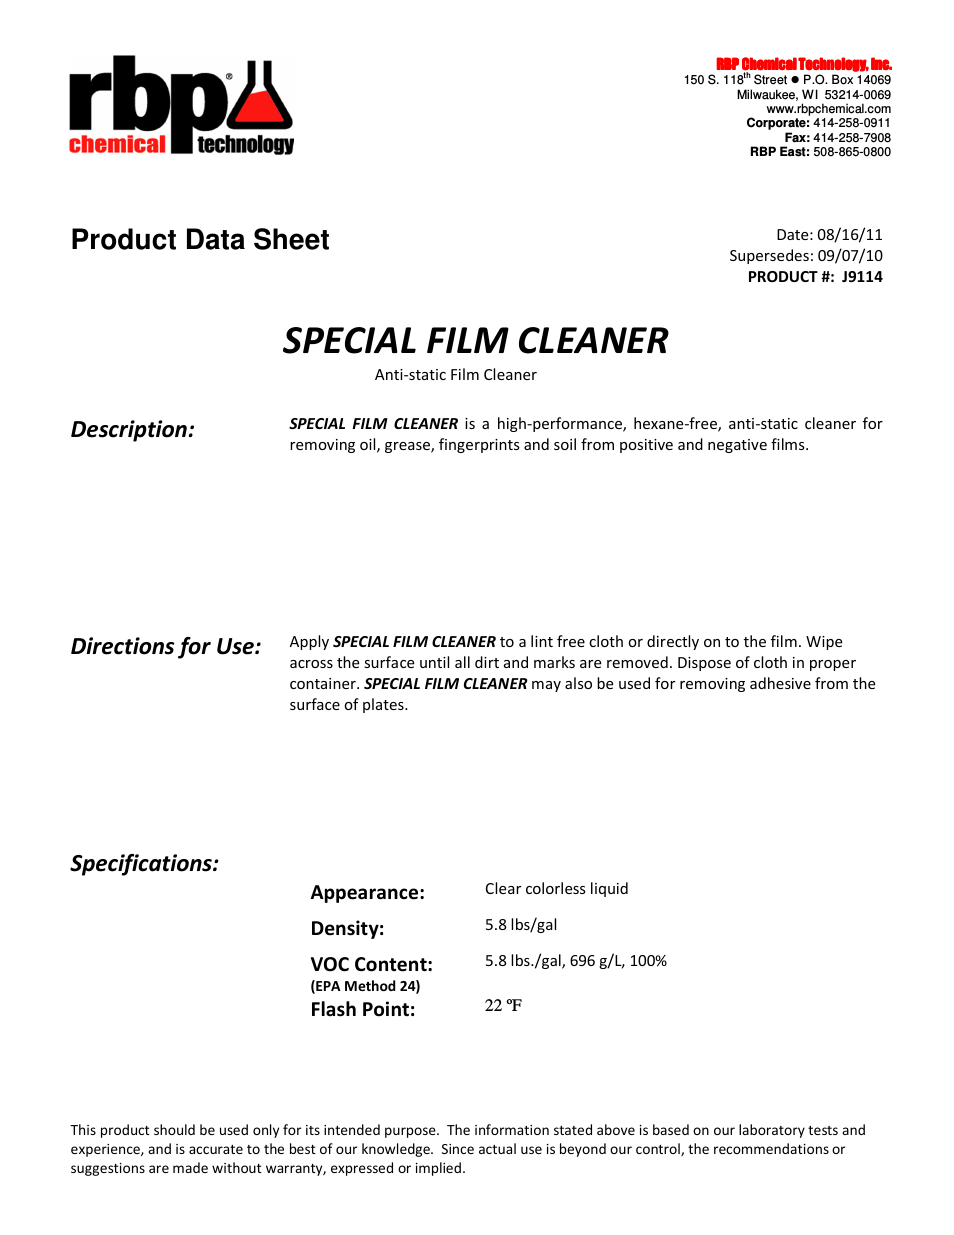 J9114 SPECIAL FILM CLEANER